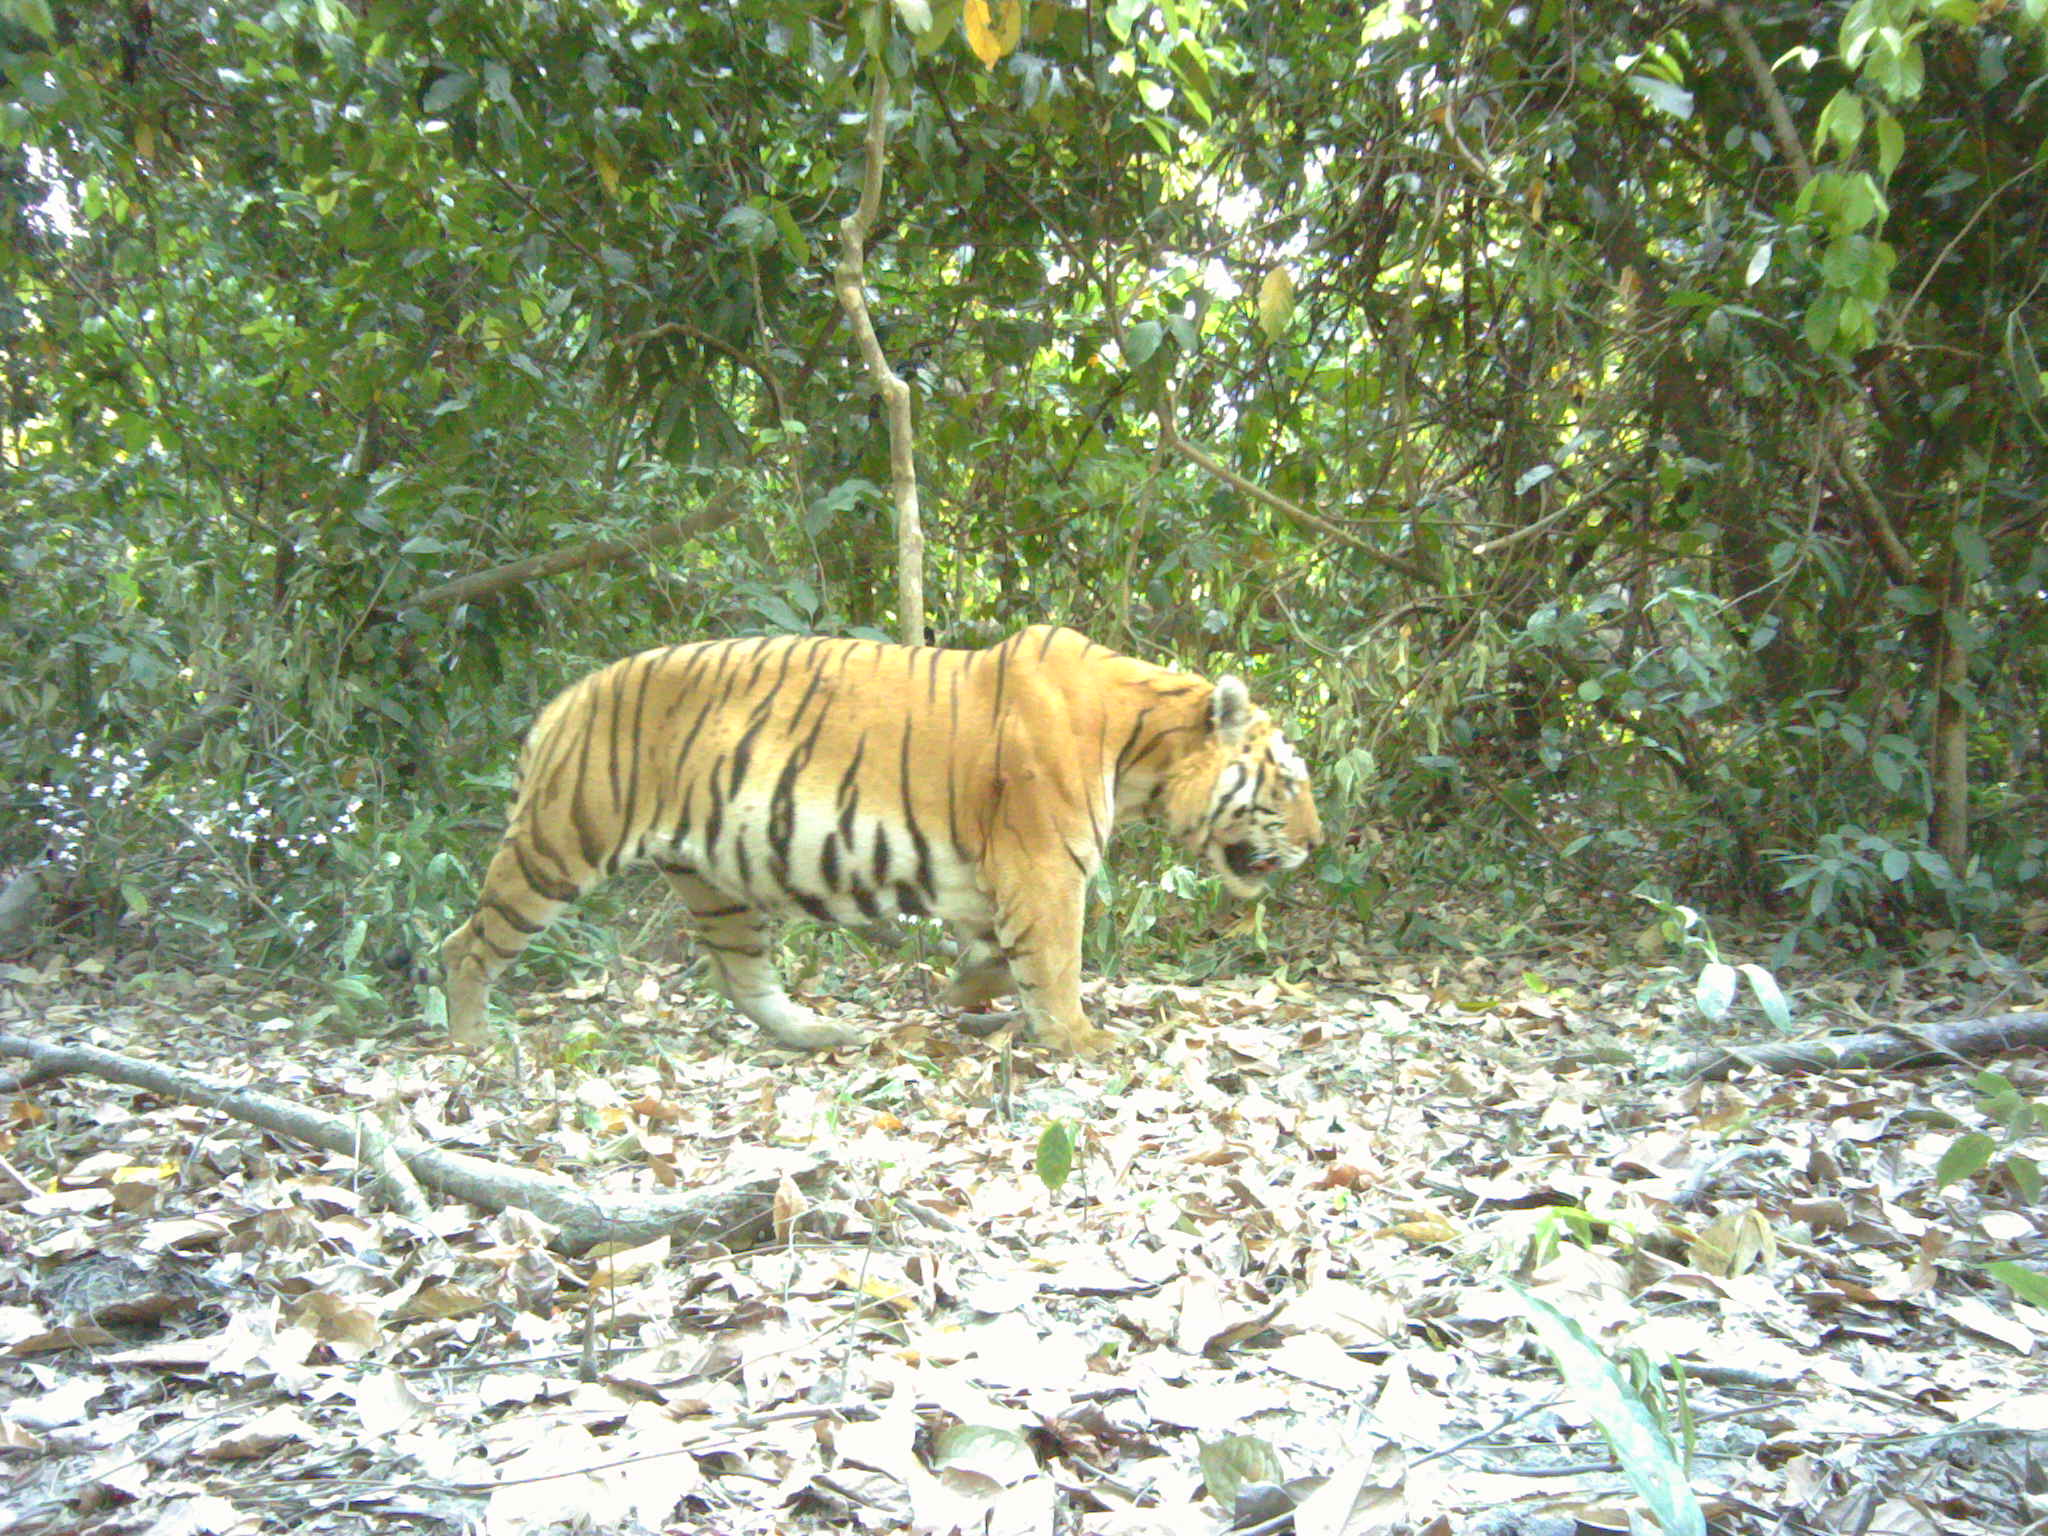 Male Tiger photo captured